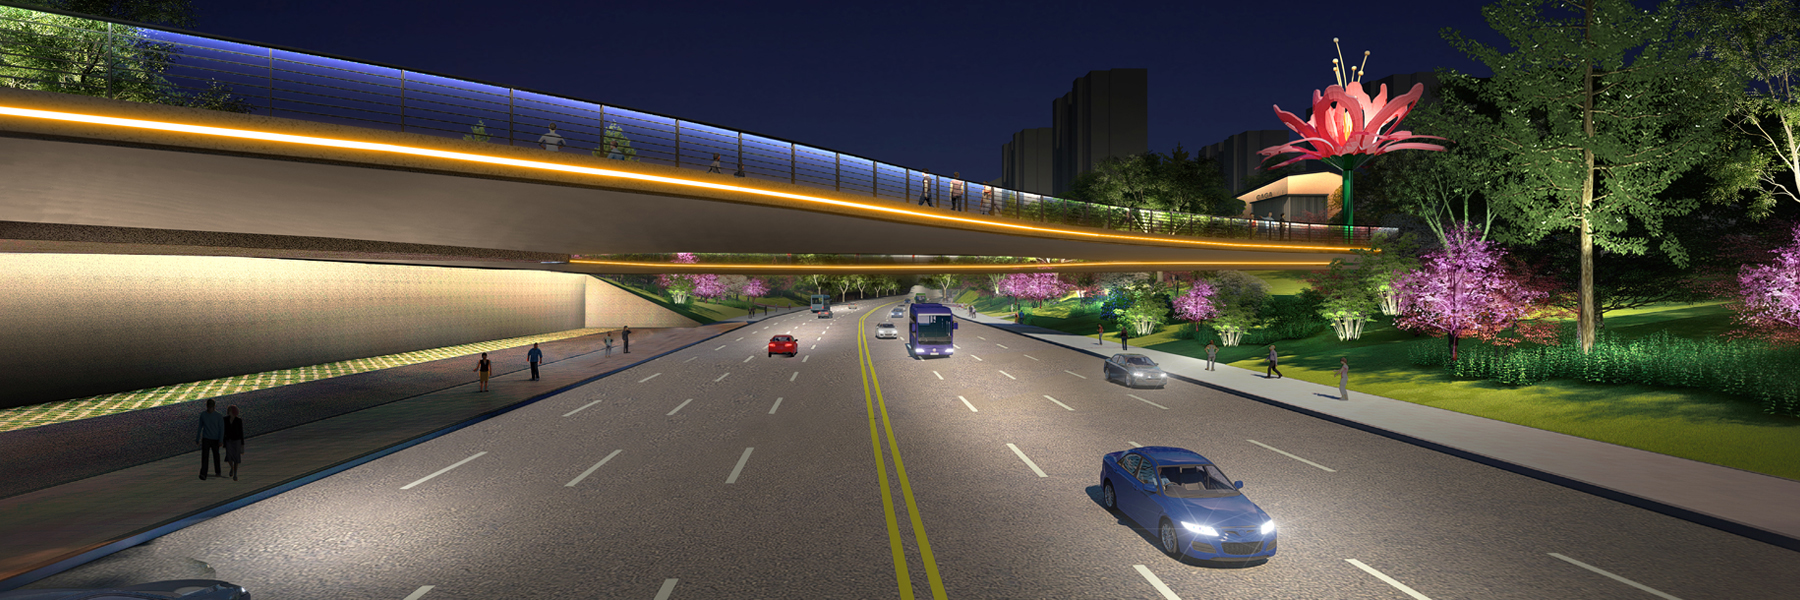 Bridge Projects Light-up Design